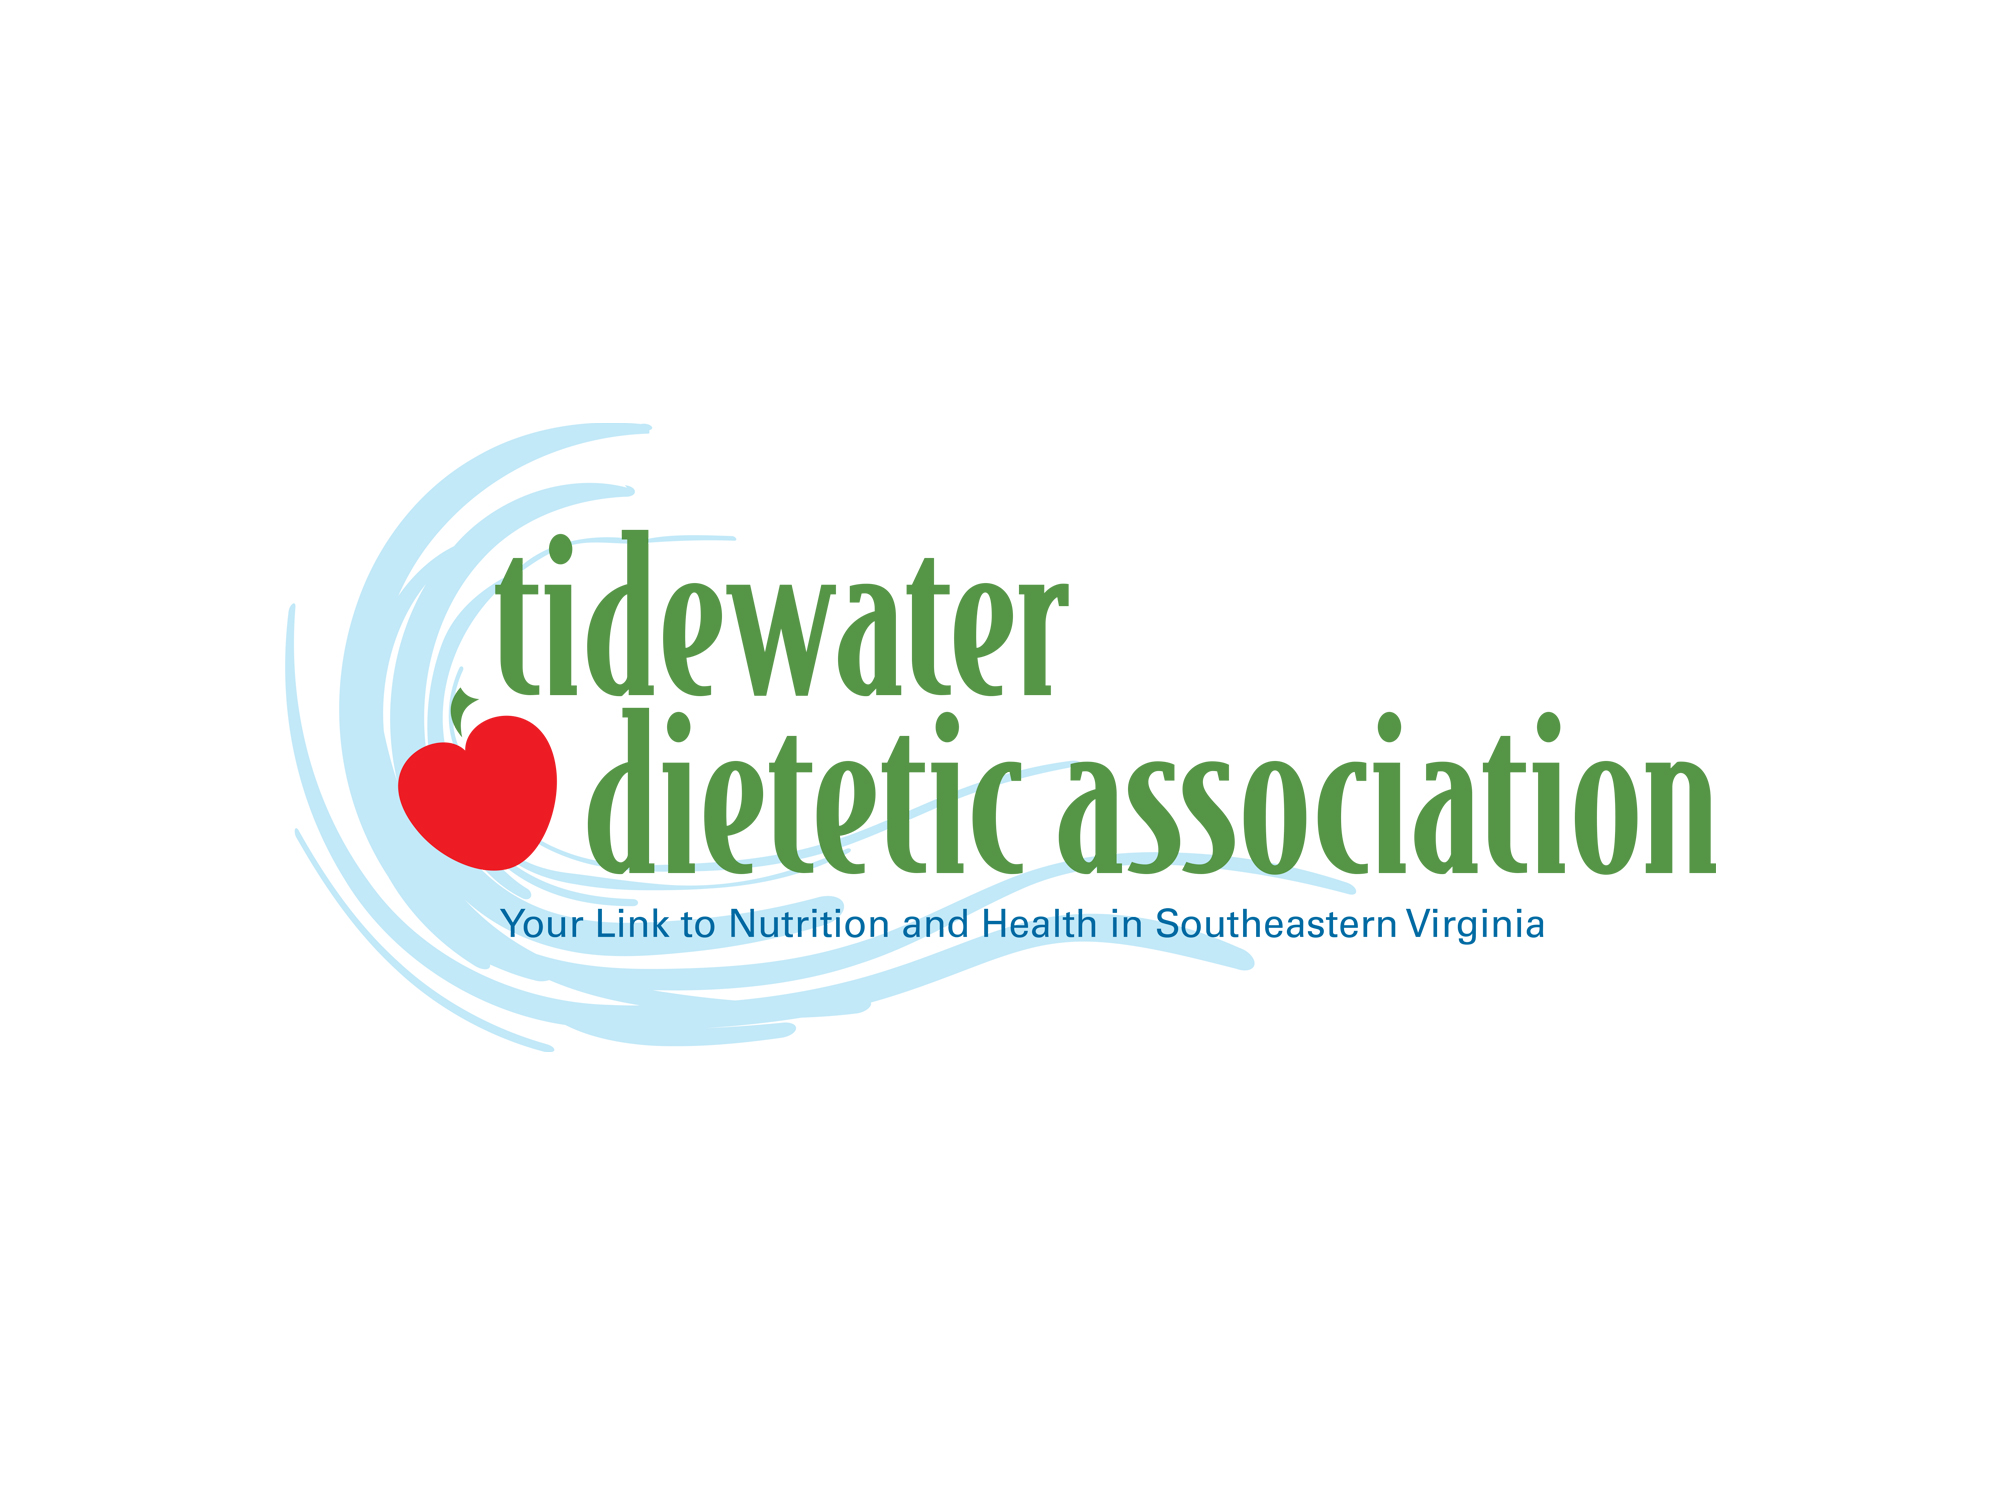 Tidewater Dietetic Association, 2009.